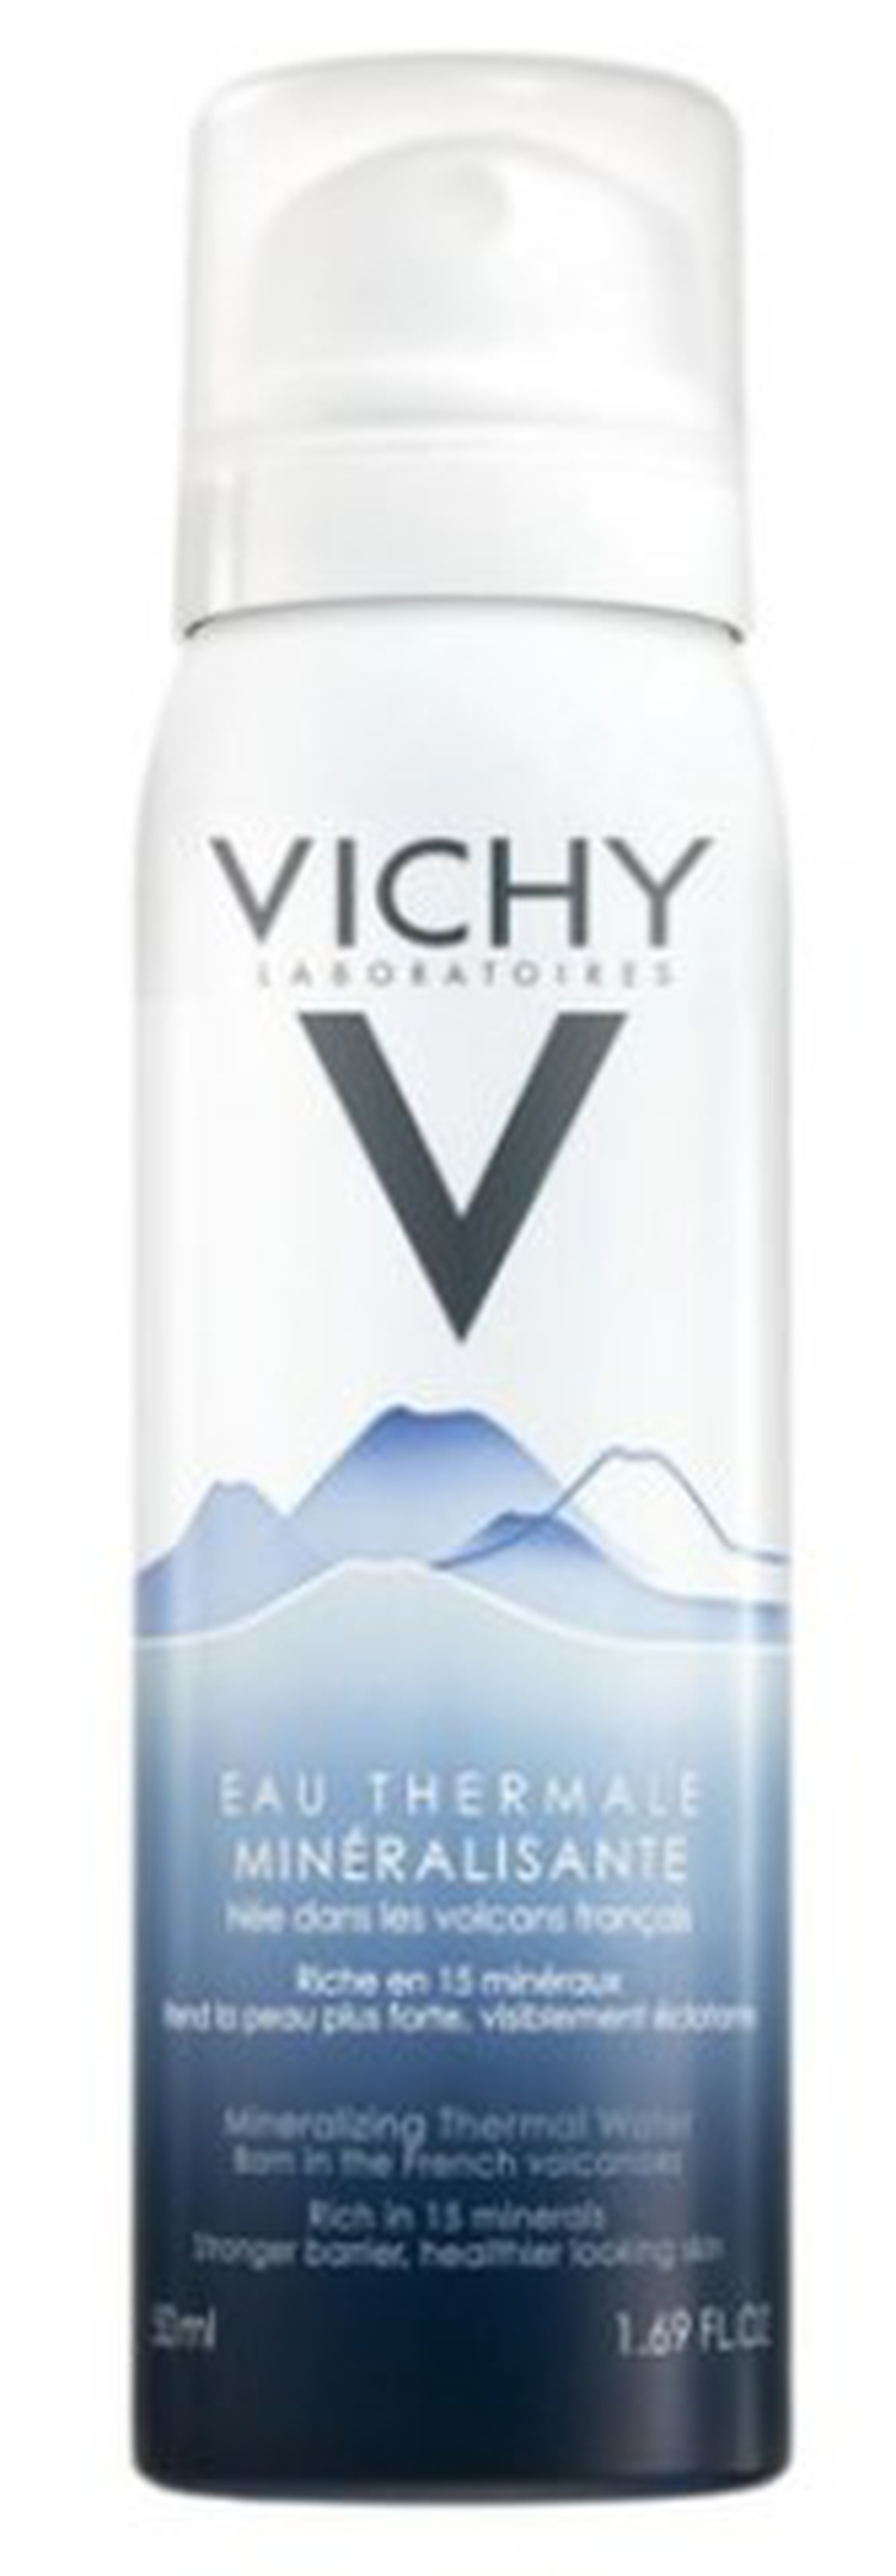 Vichy термальная минерализирующая вода Vichy спа 50 мл фото